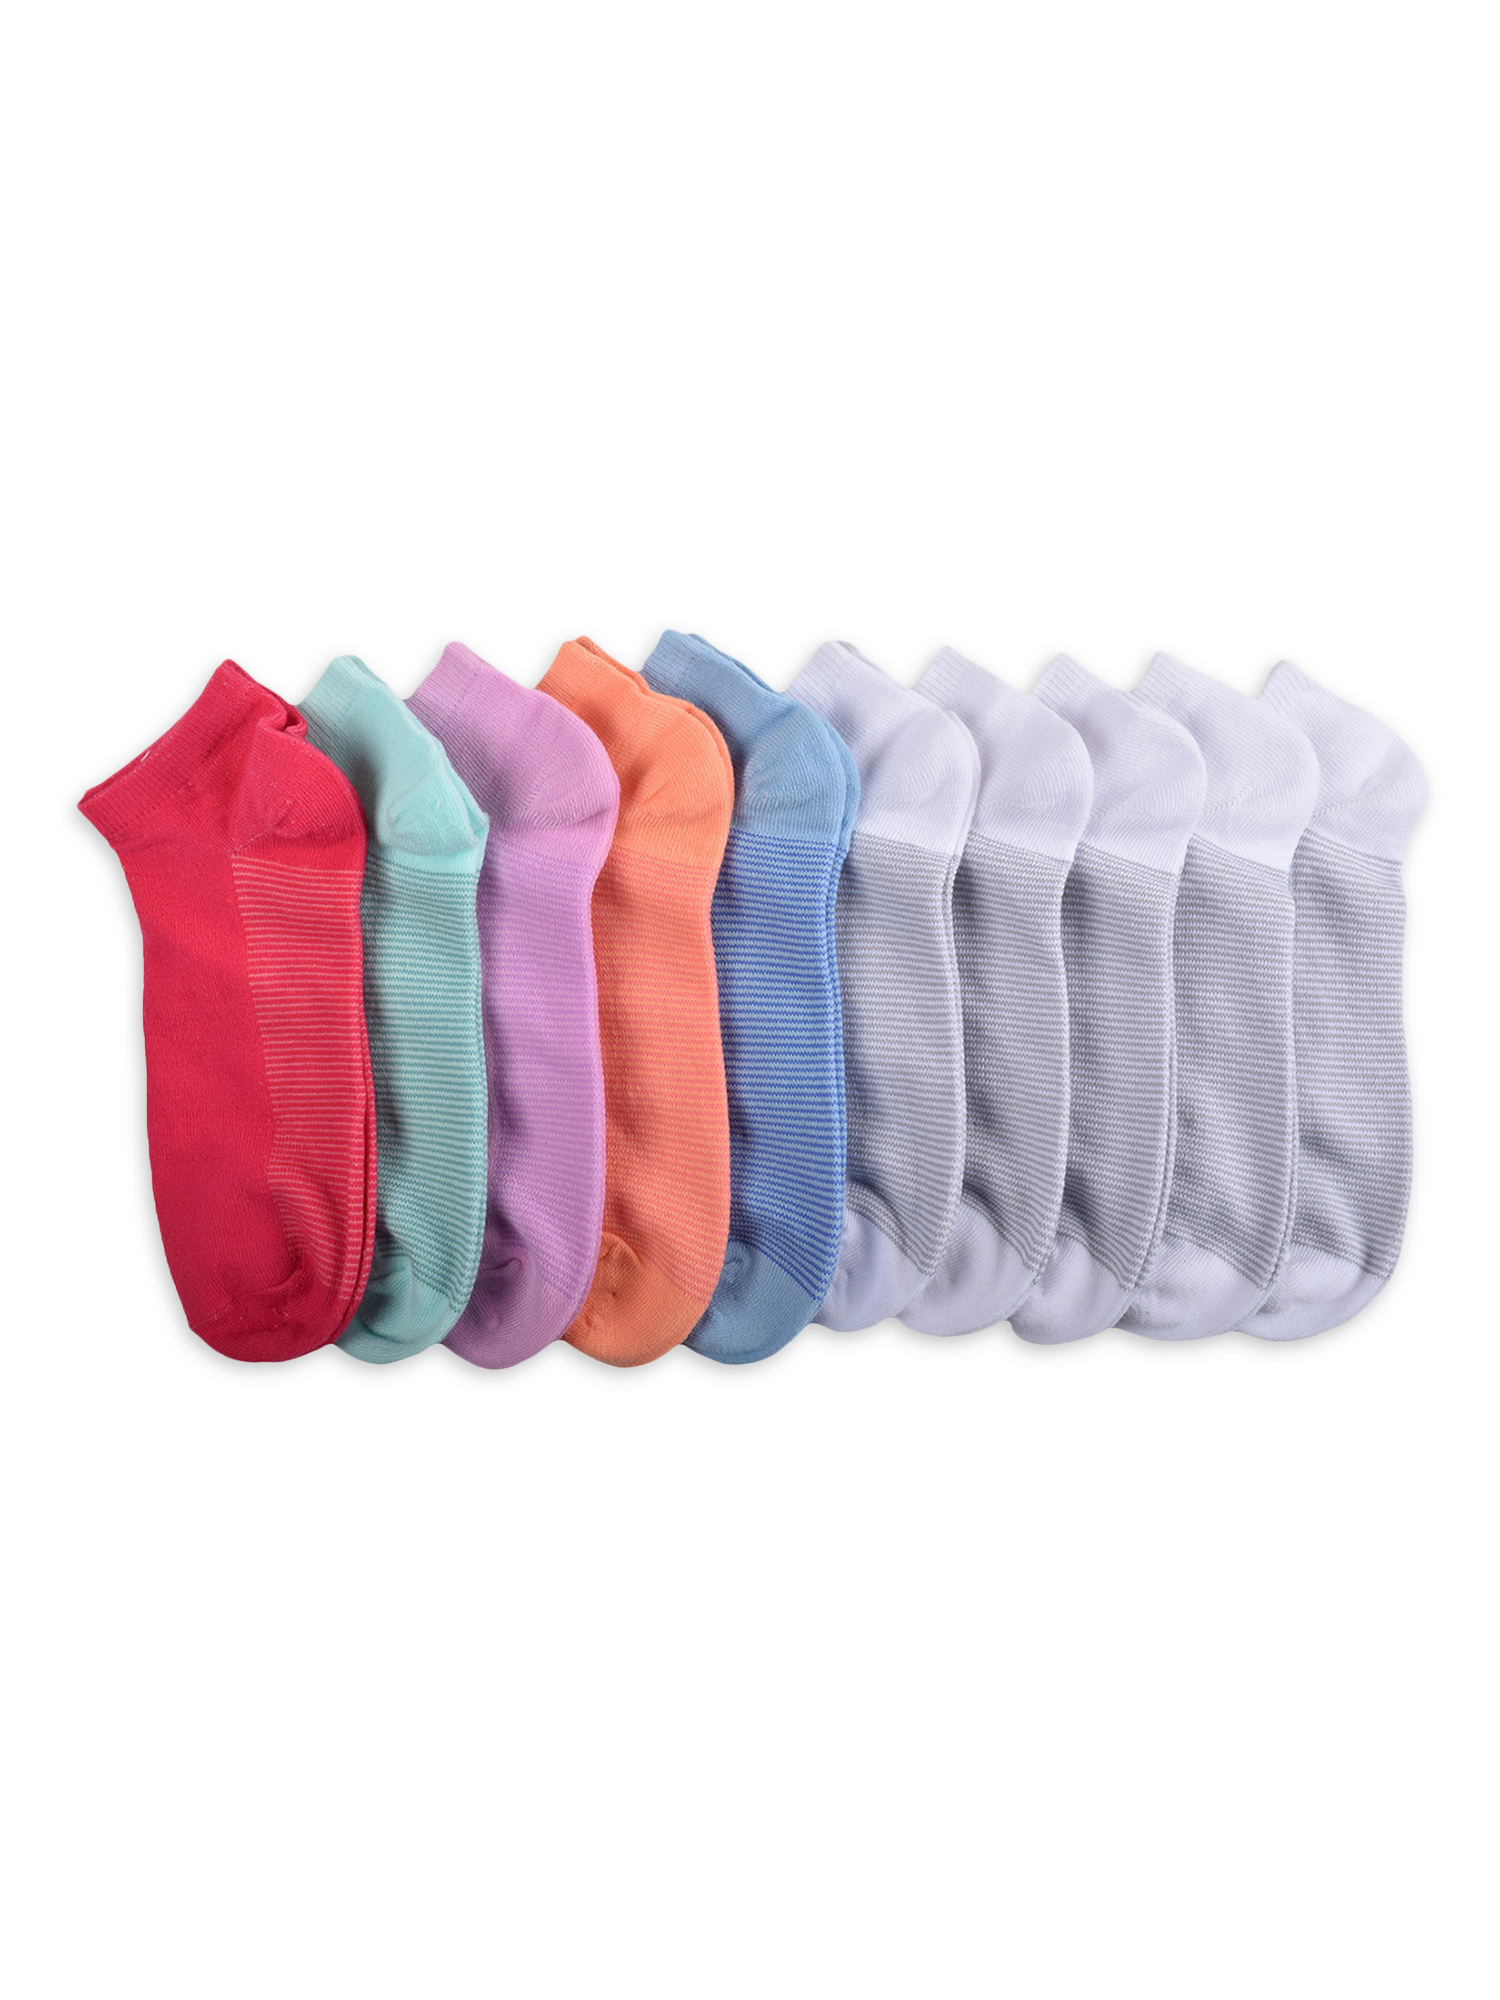 No Boundaries Women's Low-Cut Socks, 10-Pack, Sizes 4-10 - image 5 of 5